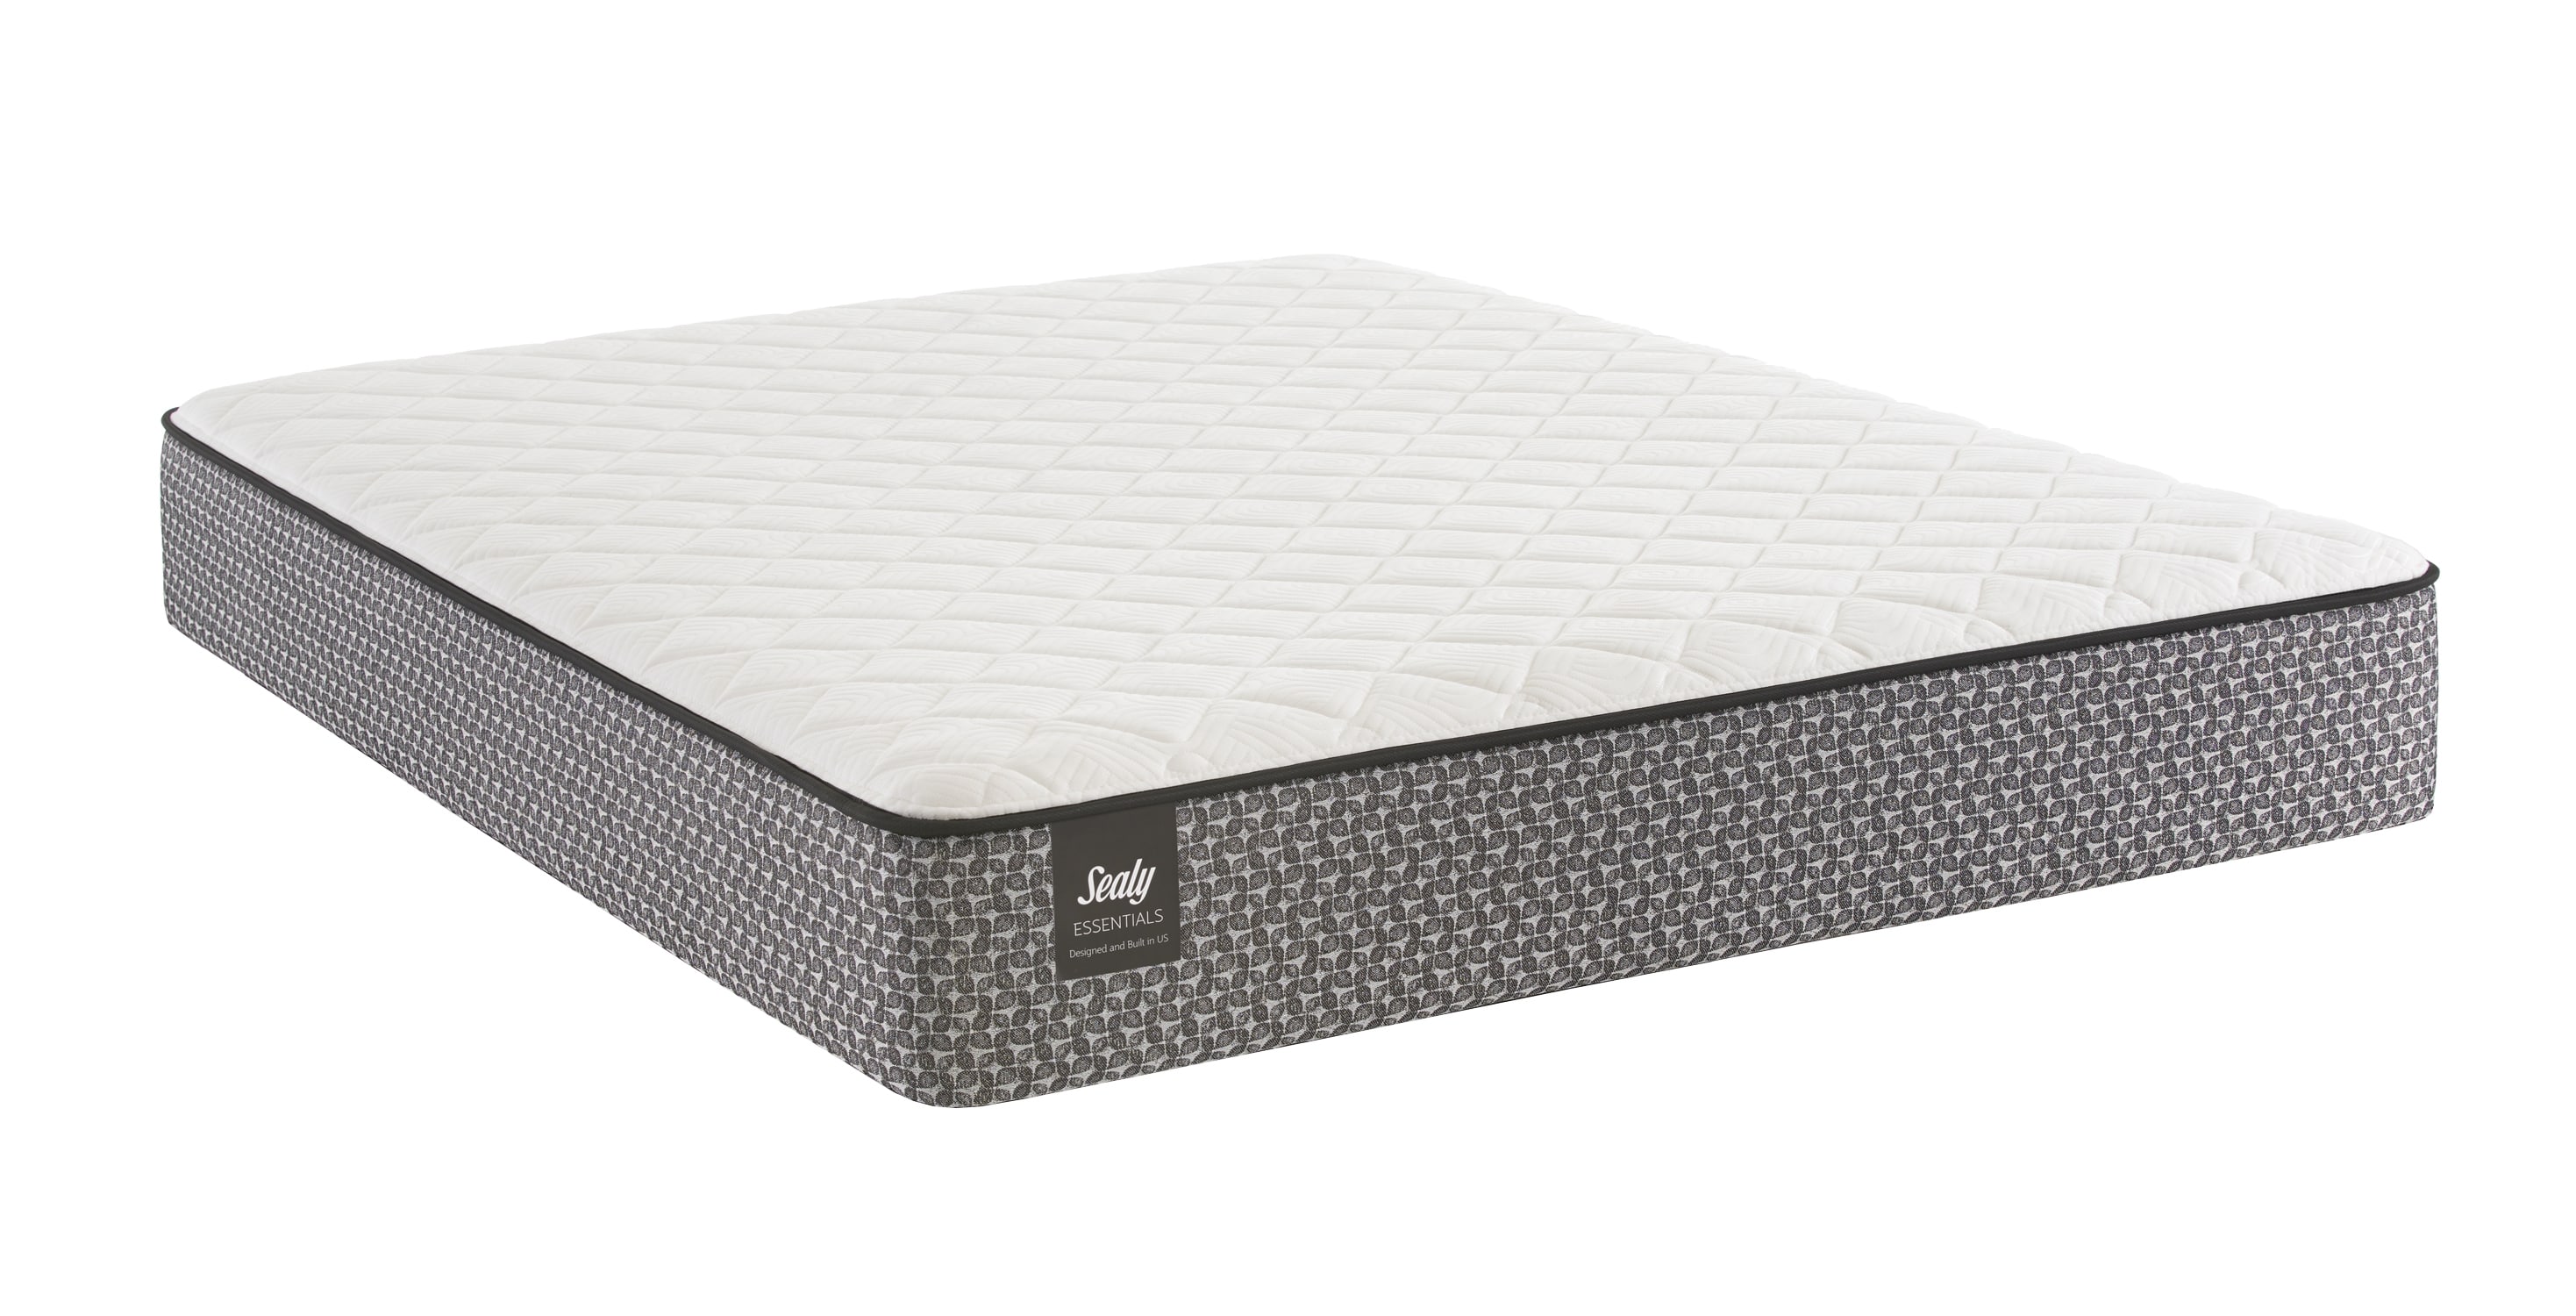 sealy essentials osage 10 firm mattress